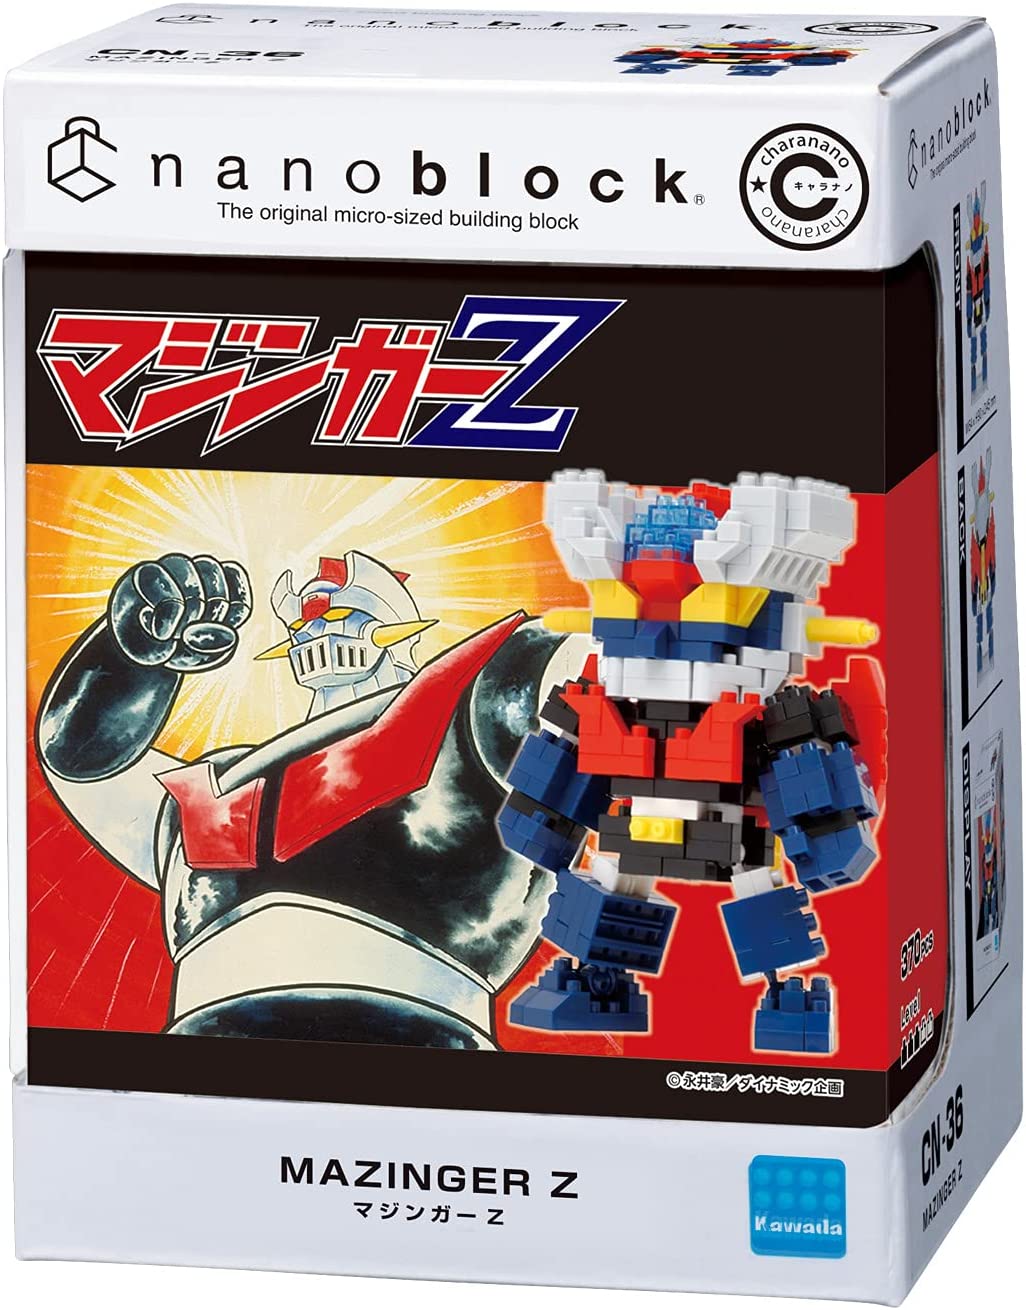 Mazinger Z Nanoblock Set